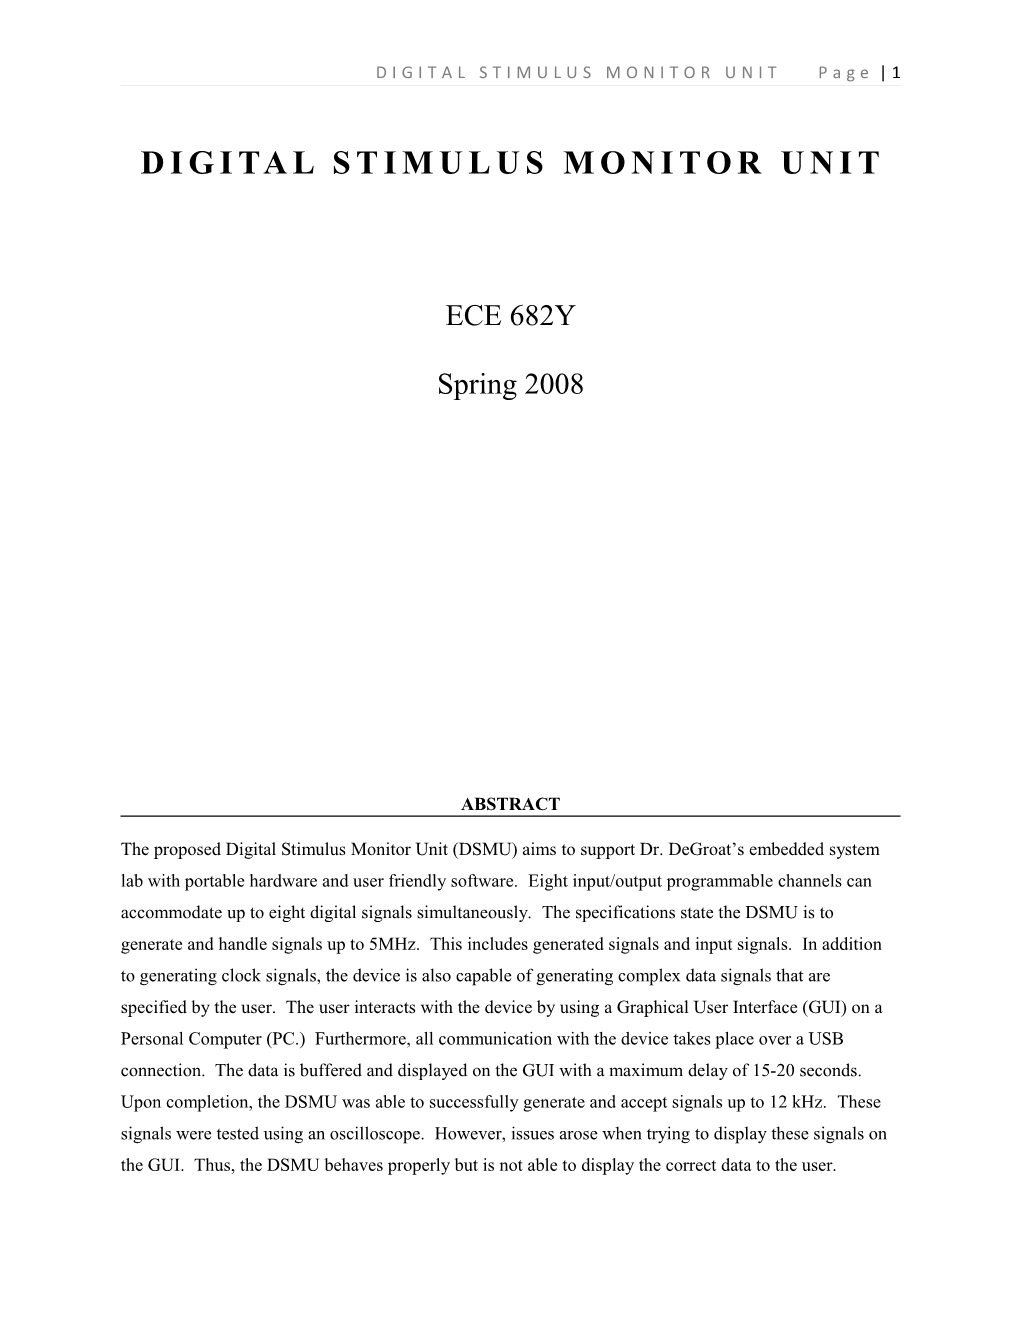 Digital Stimulus Monitor Unit